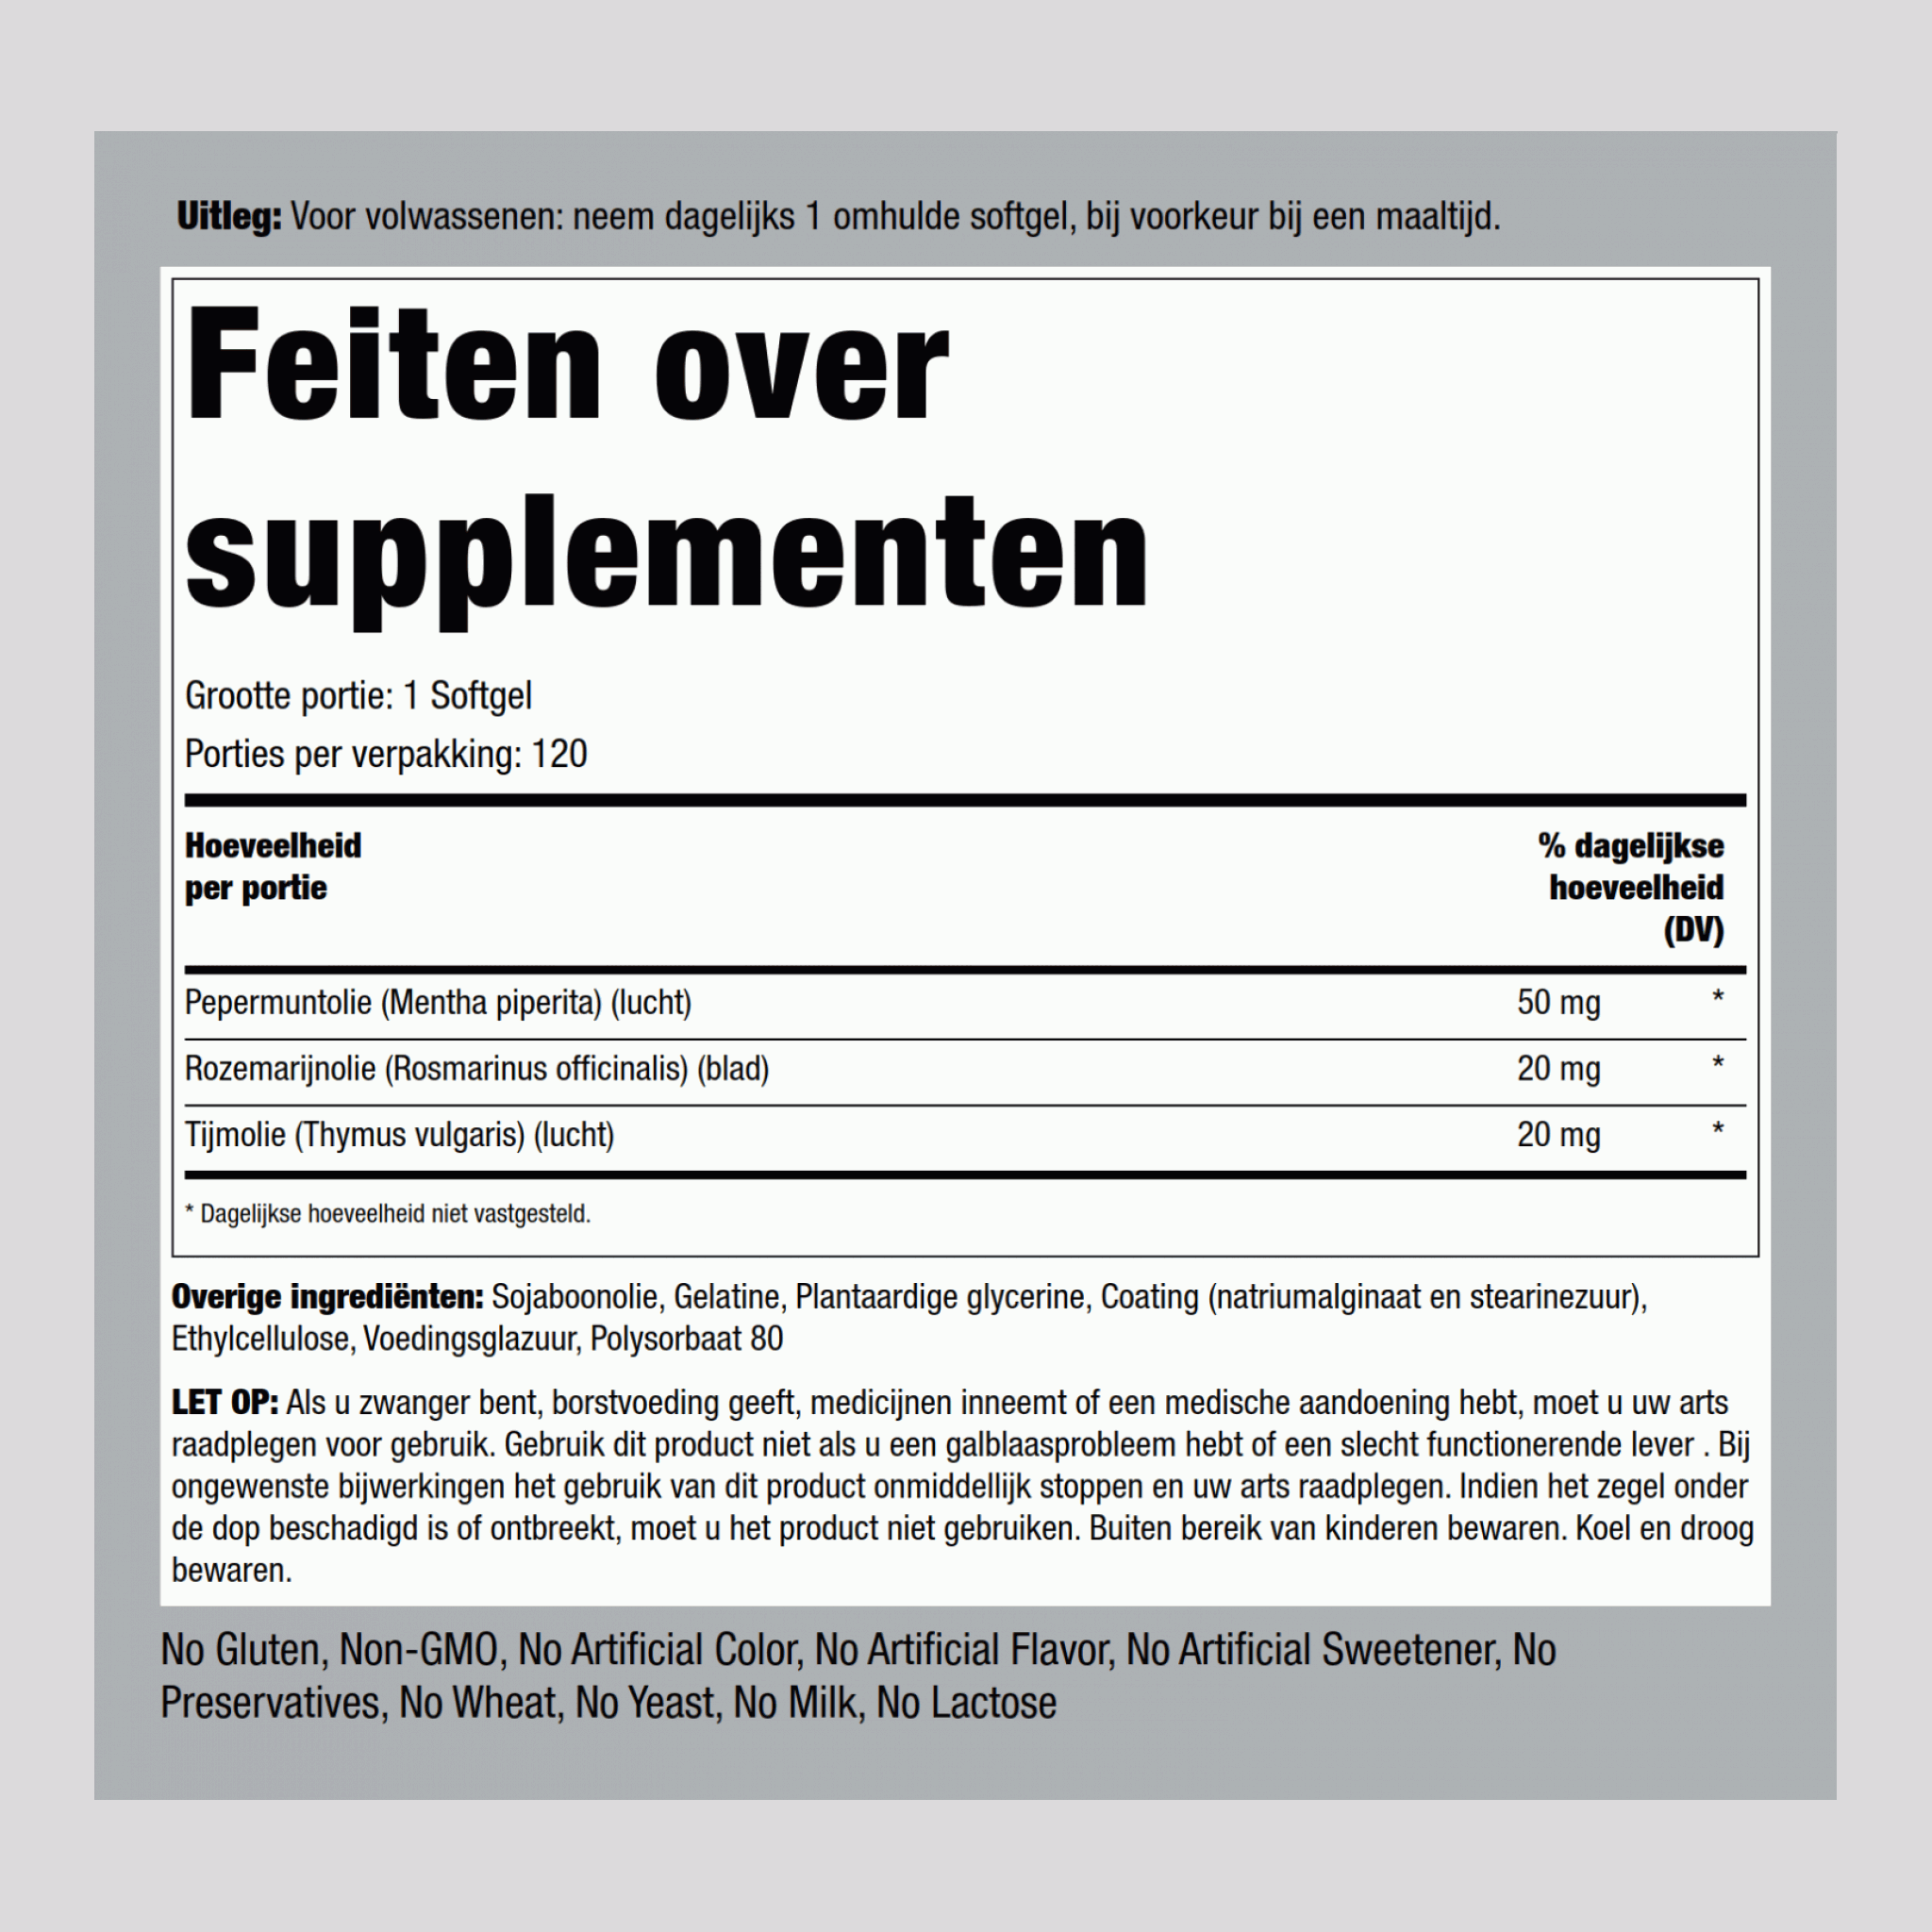 Ultra pepermuntolie (enterisch bekleed) 50 mg 120 Omhulde softgels     